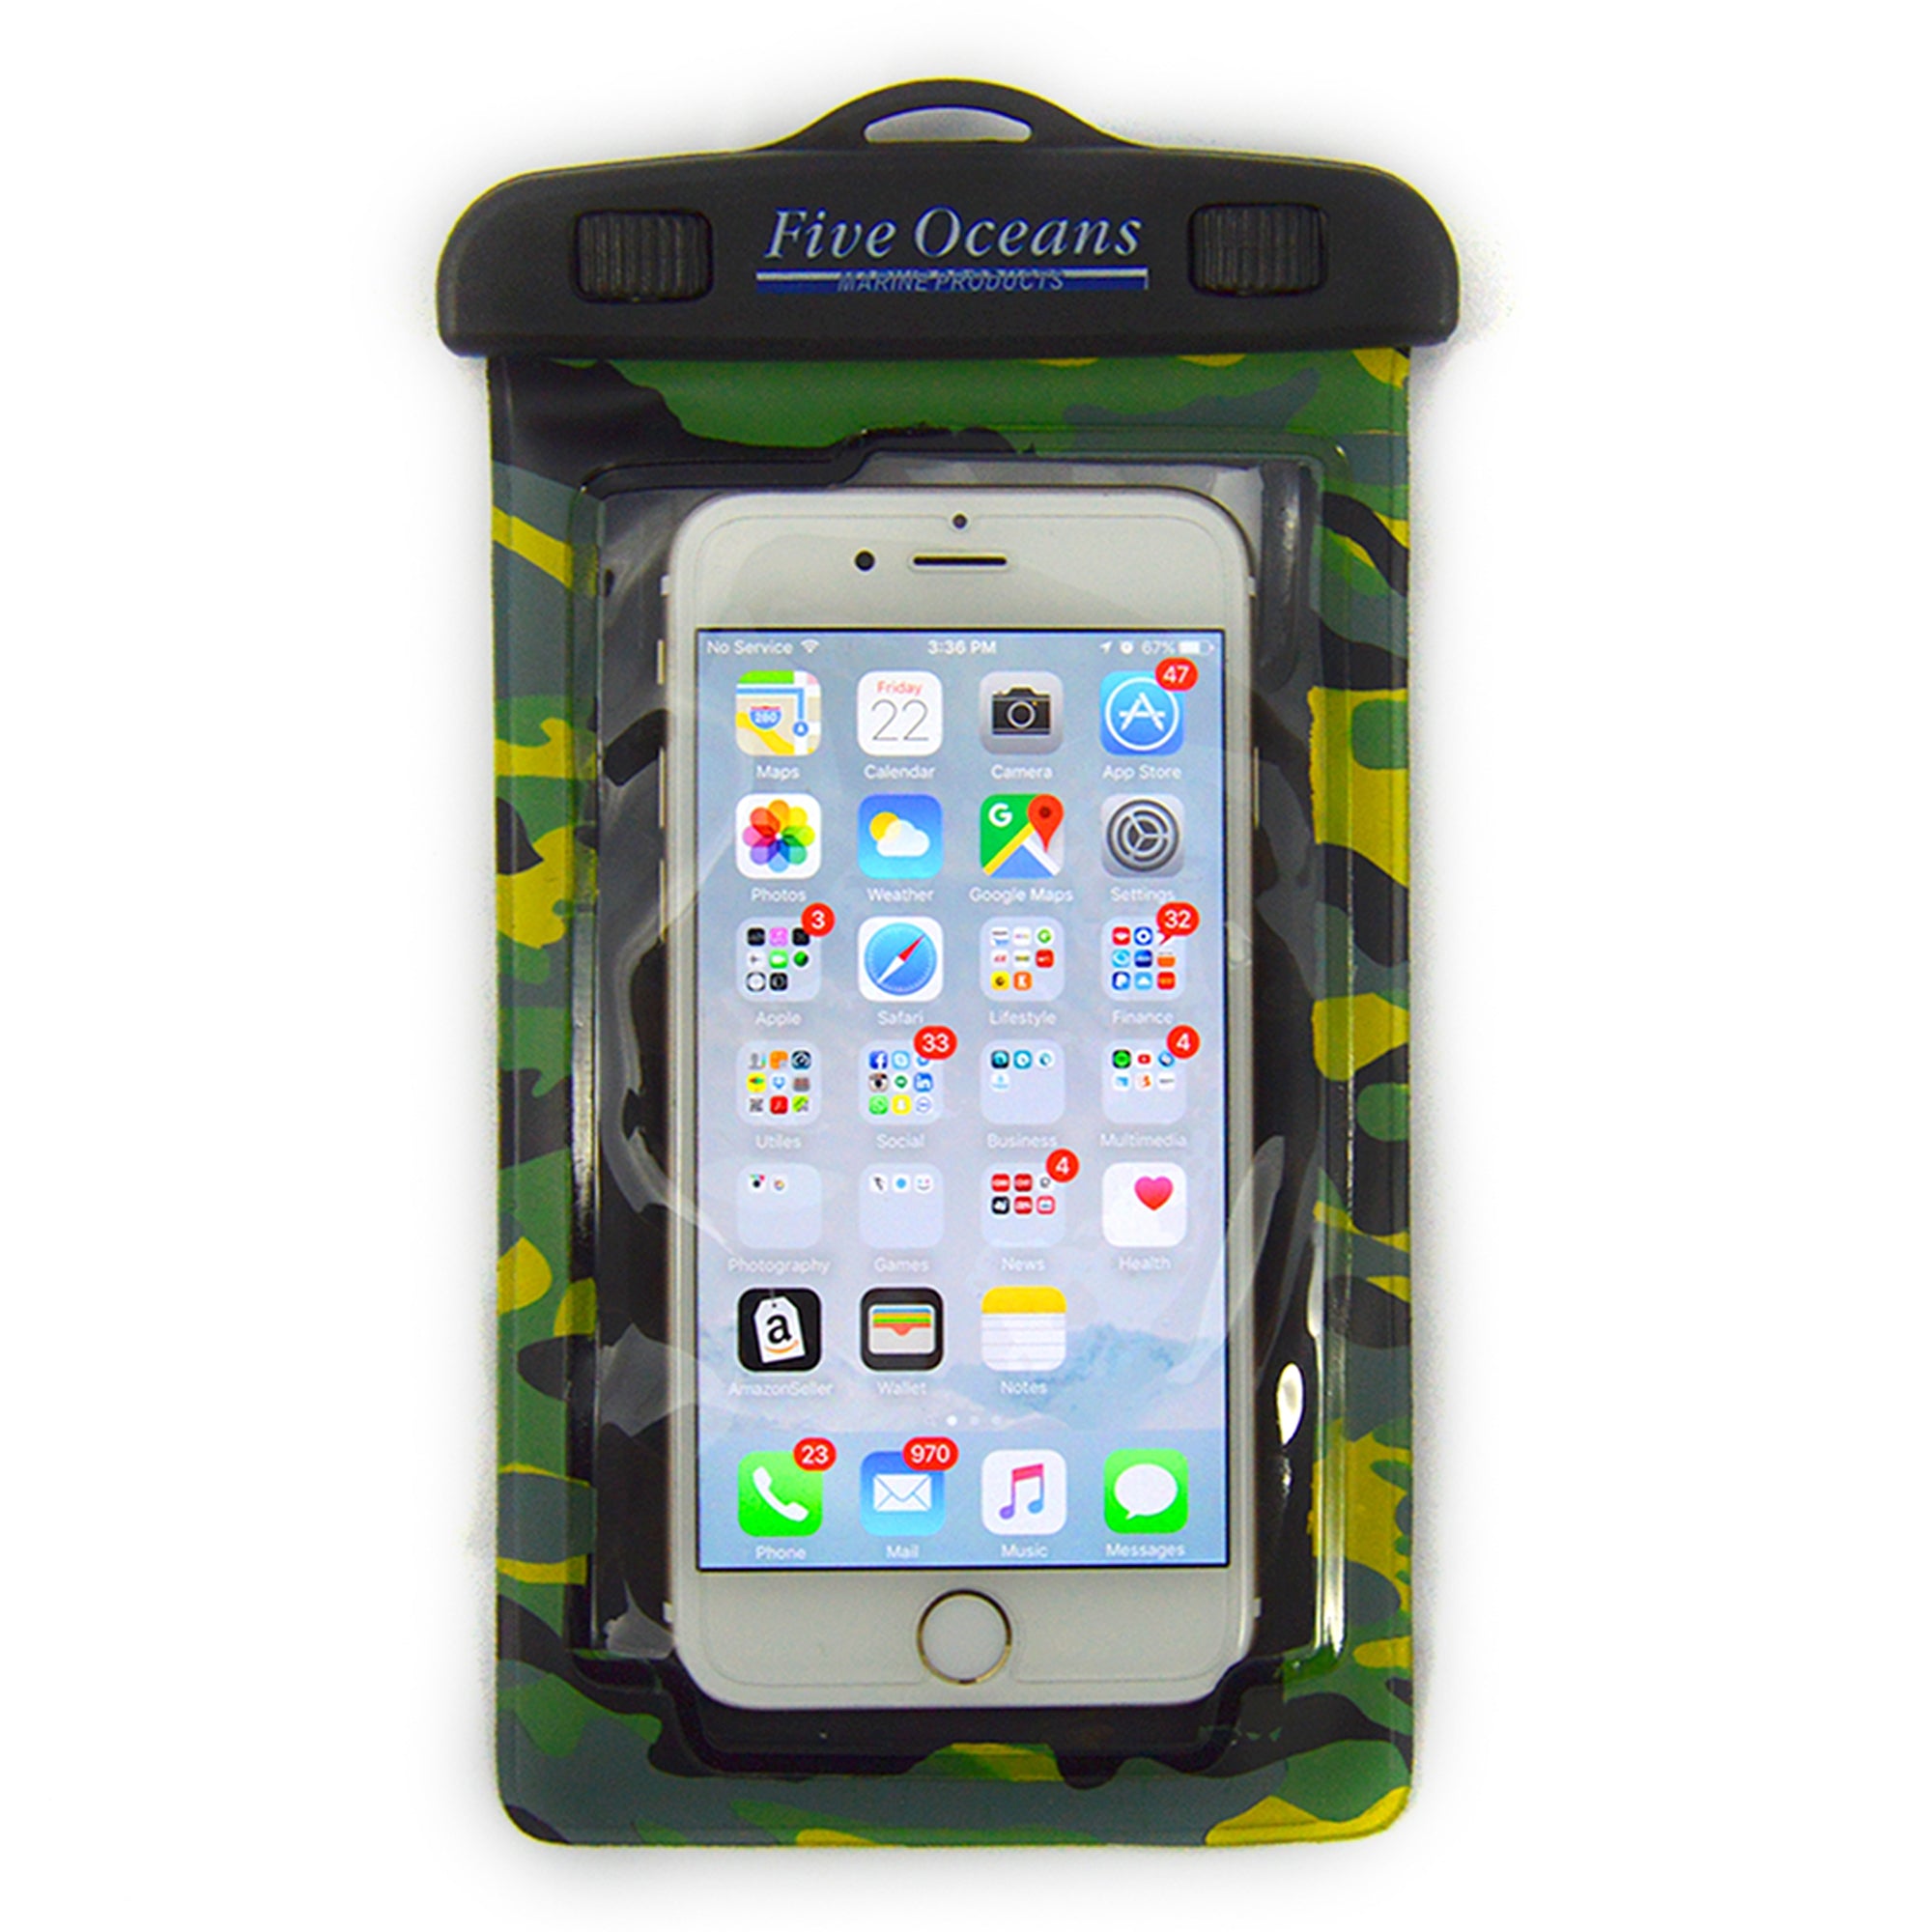 Waterproof Phone Case, Camo - FO3825